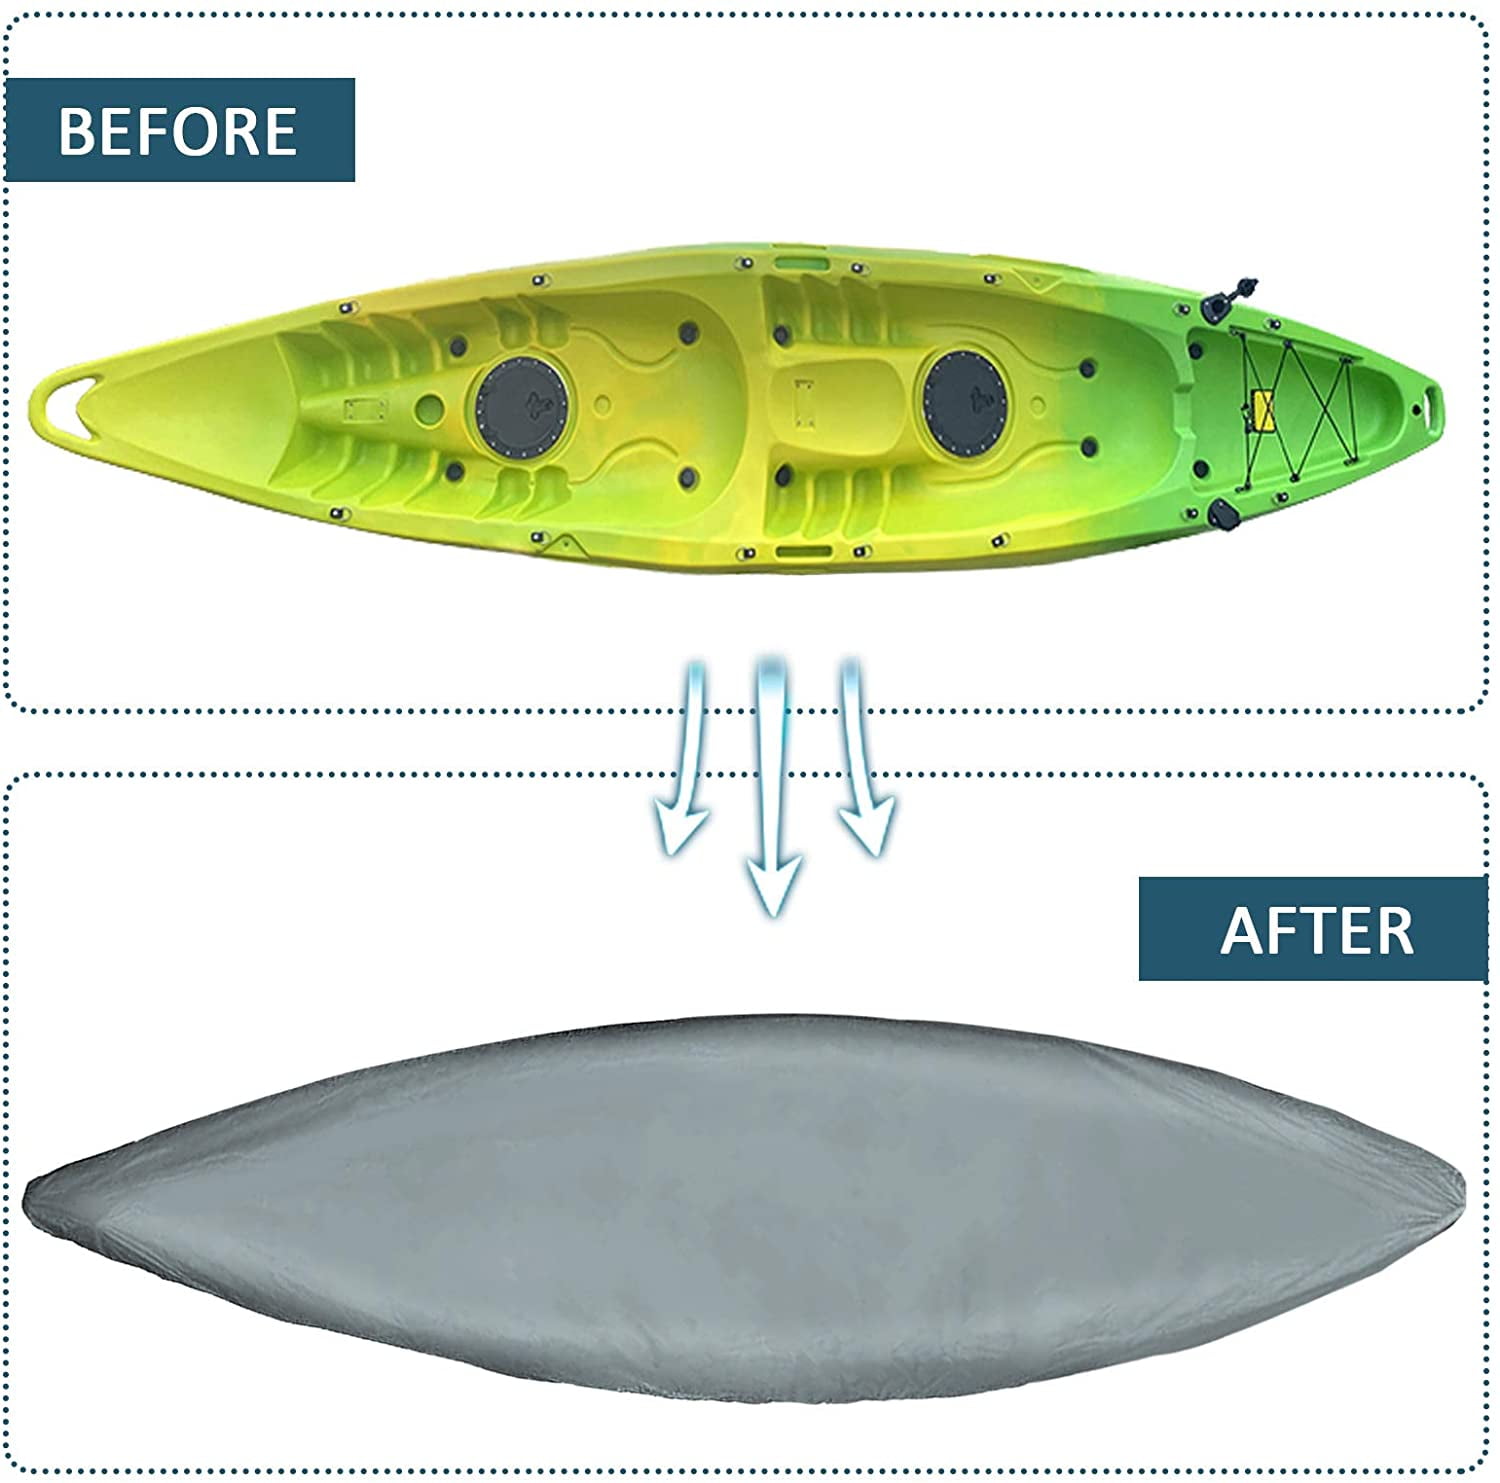 Hainice Kayak Cockpit Cover Waterproof Boat Protector Shield Canoe Storage Dust Sunblock Cover S 